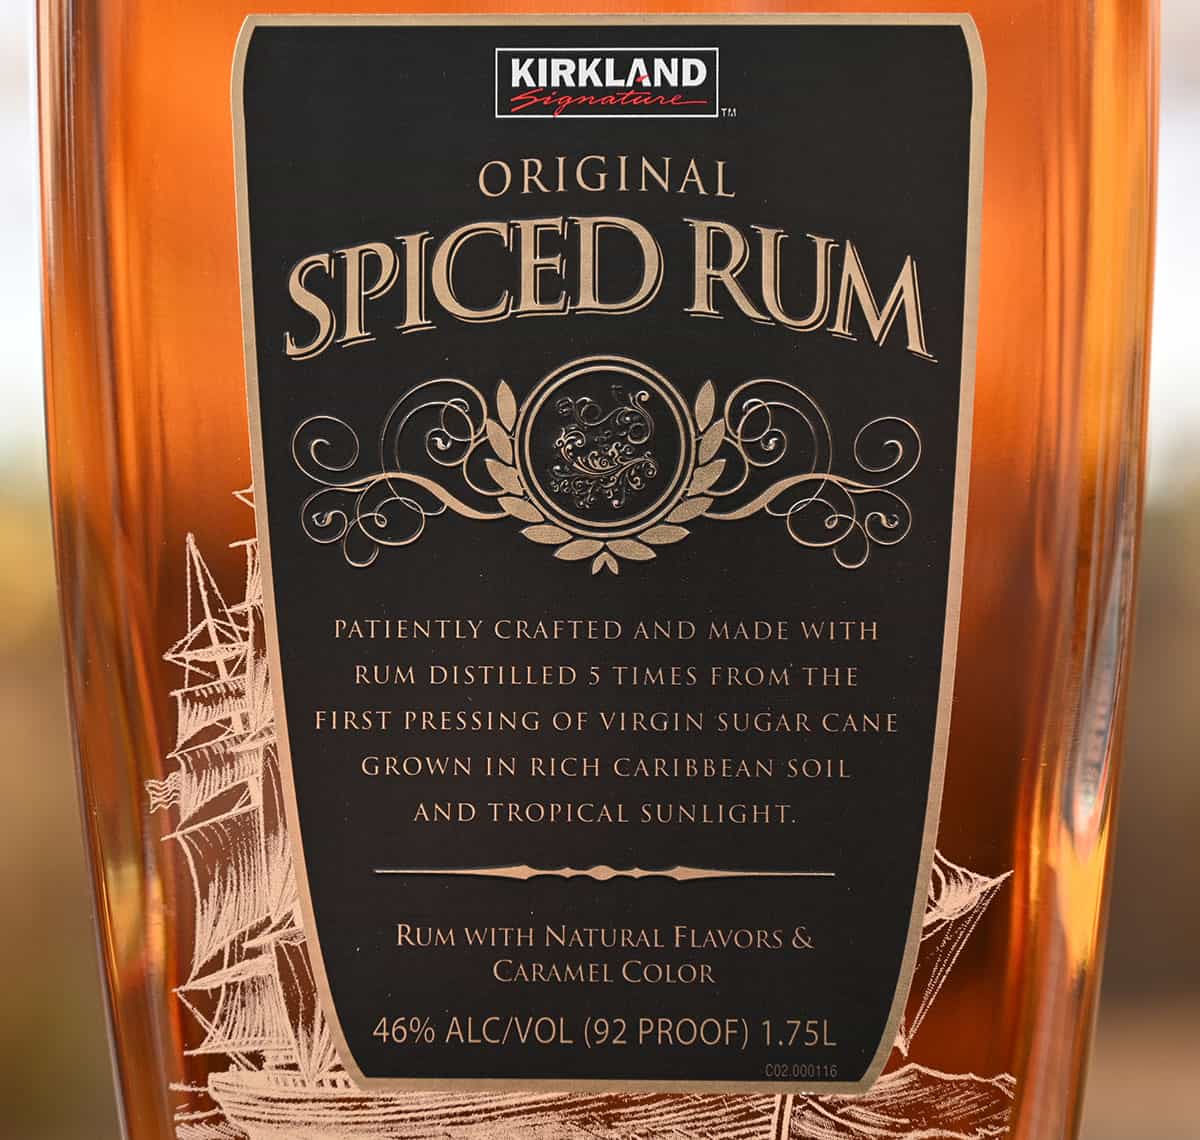 Costco Kirkland Signature Original Spiced Rum Review - Costcuisine